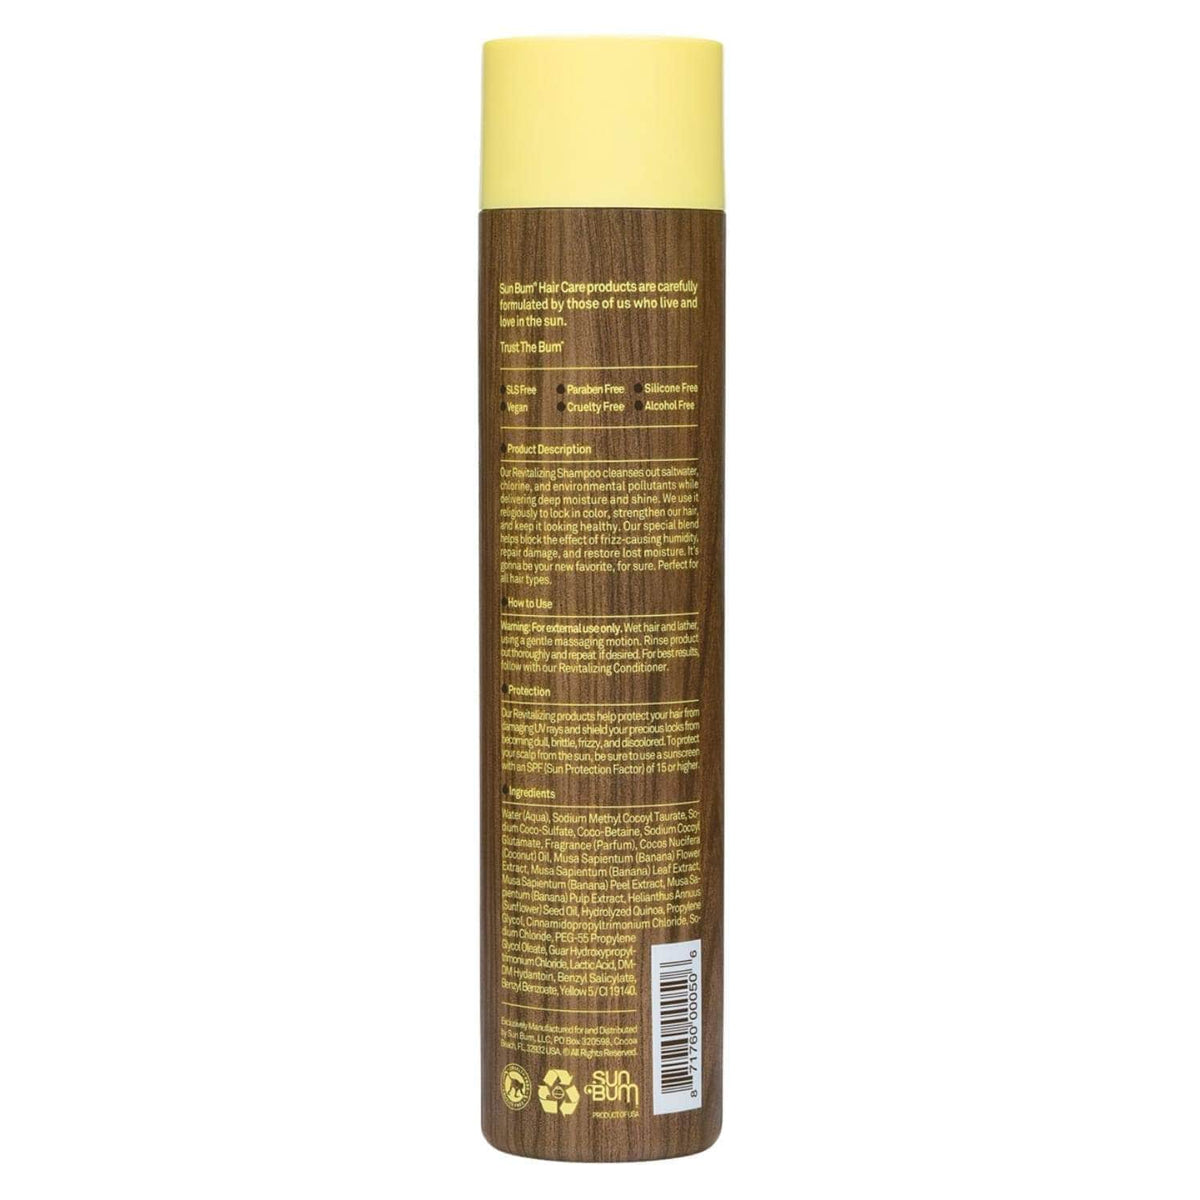 Sun Bum Revitalizing Shampoo 300ml - Hair Shampoo/Conditioner by Sun Bum 300ml